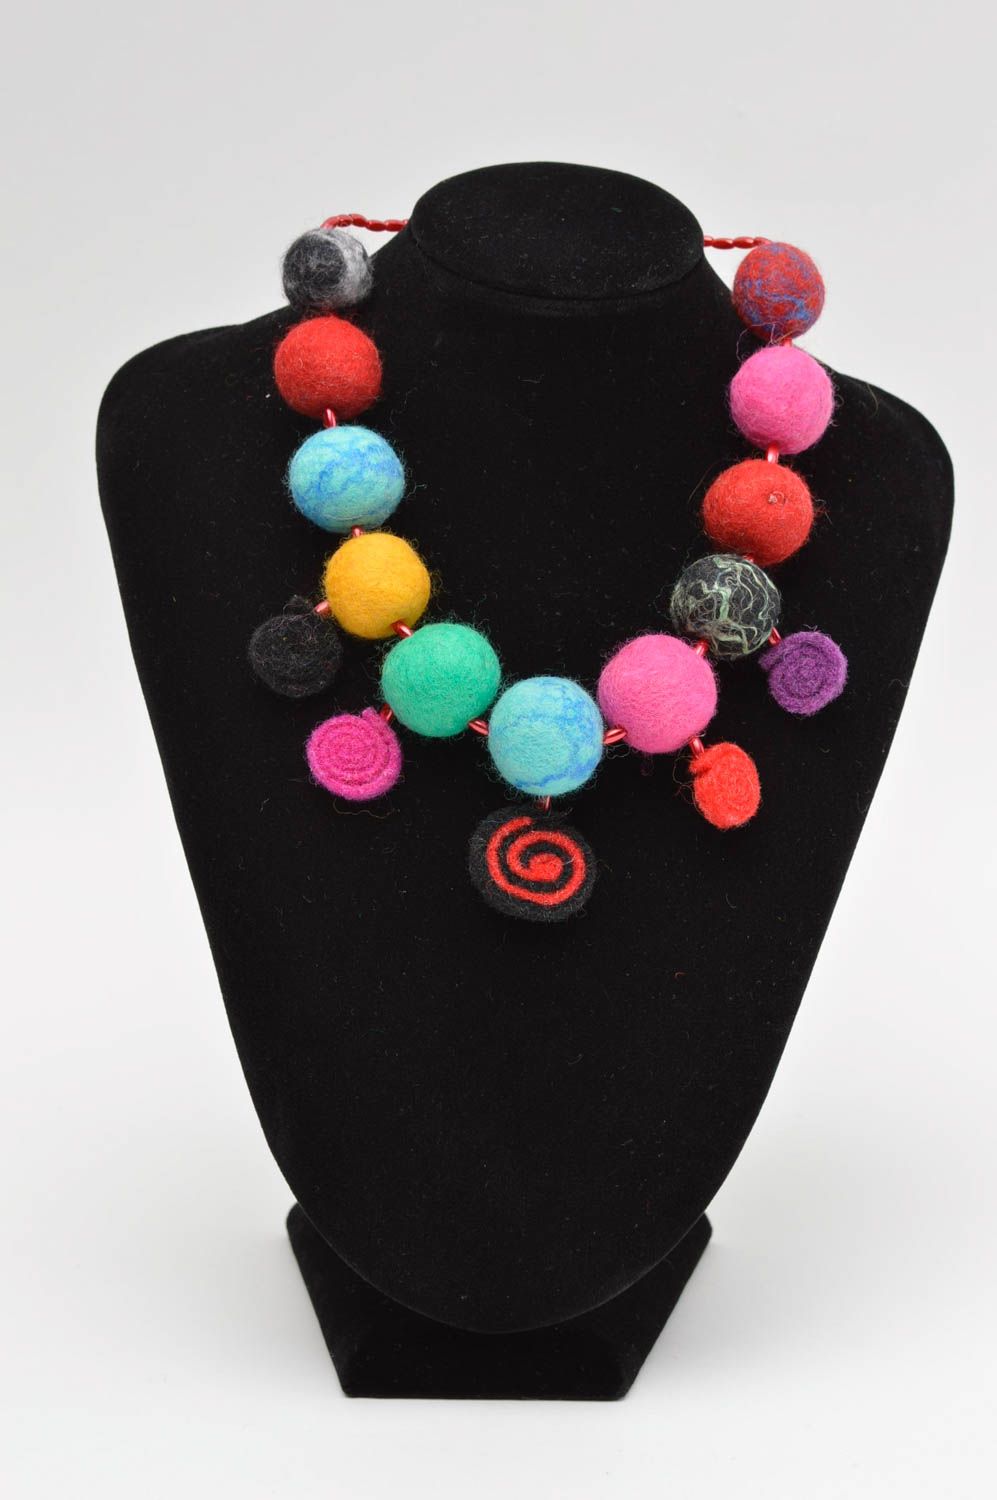 Handmade felt necklace woolen accessories for women stylish fabric jewelry photo 1